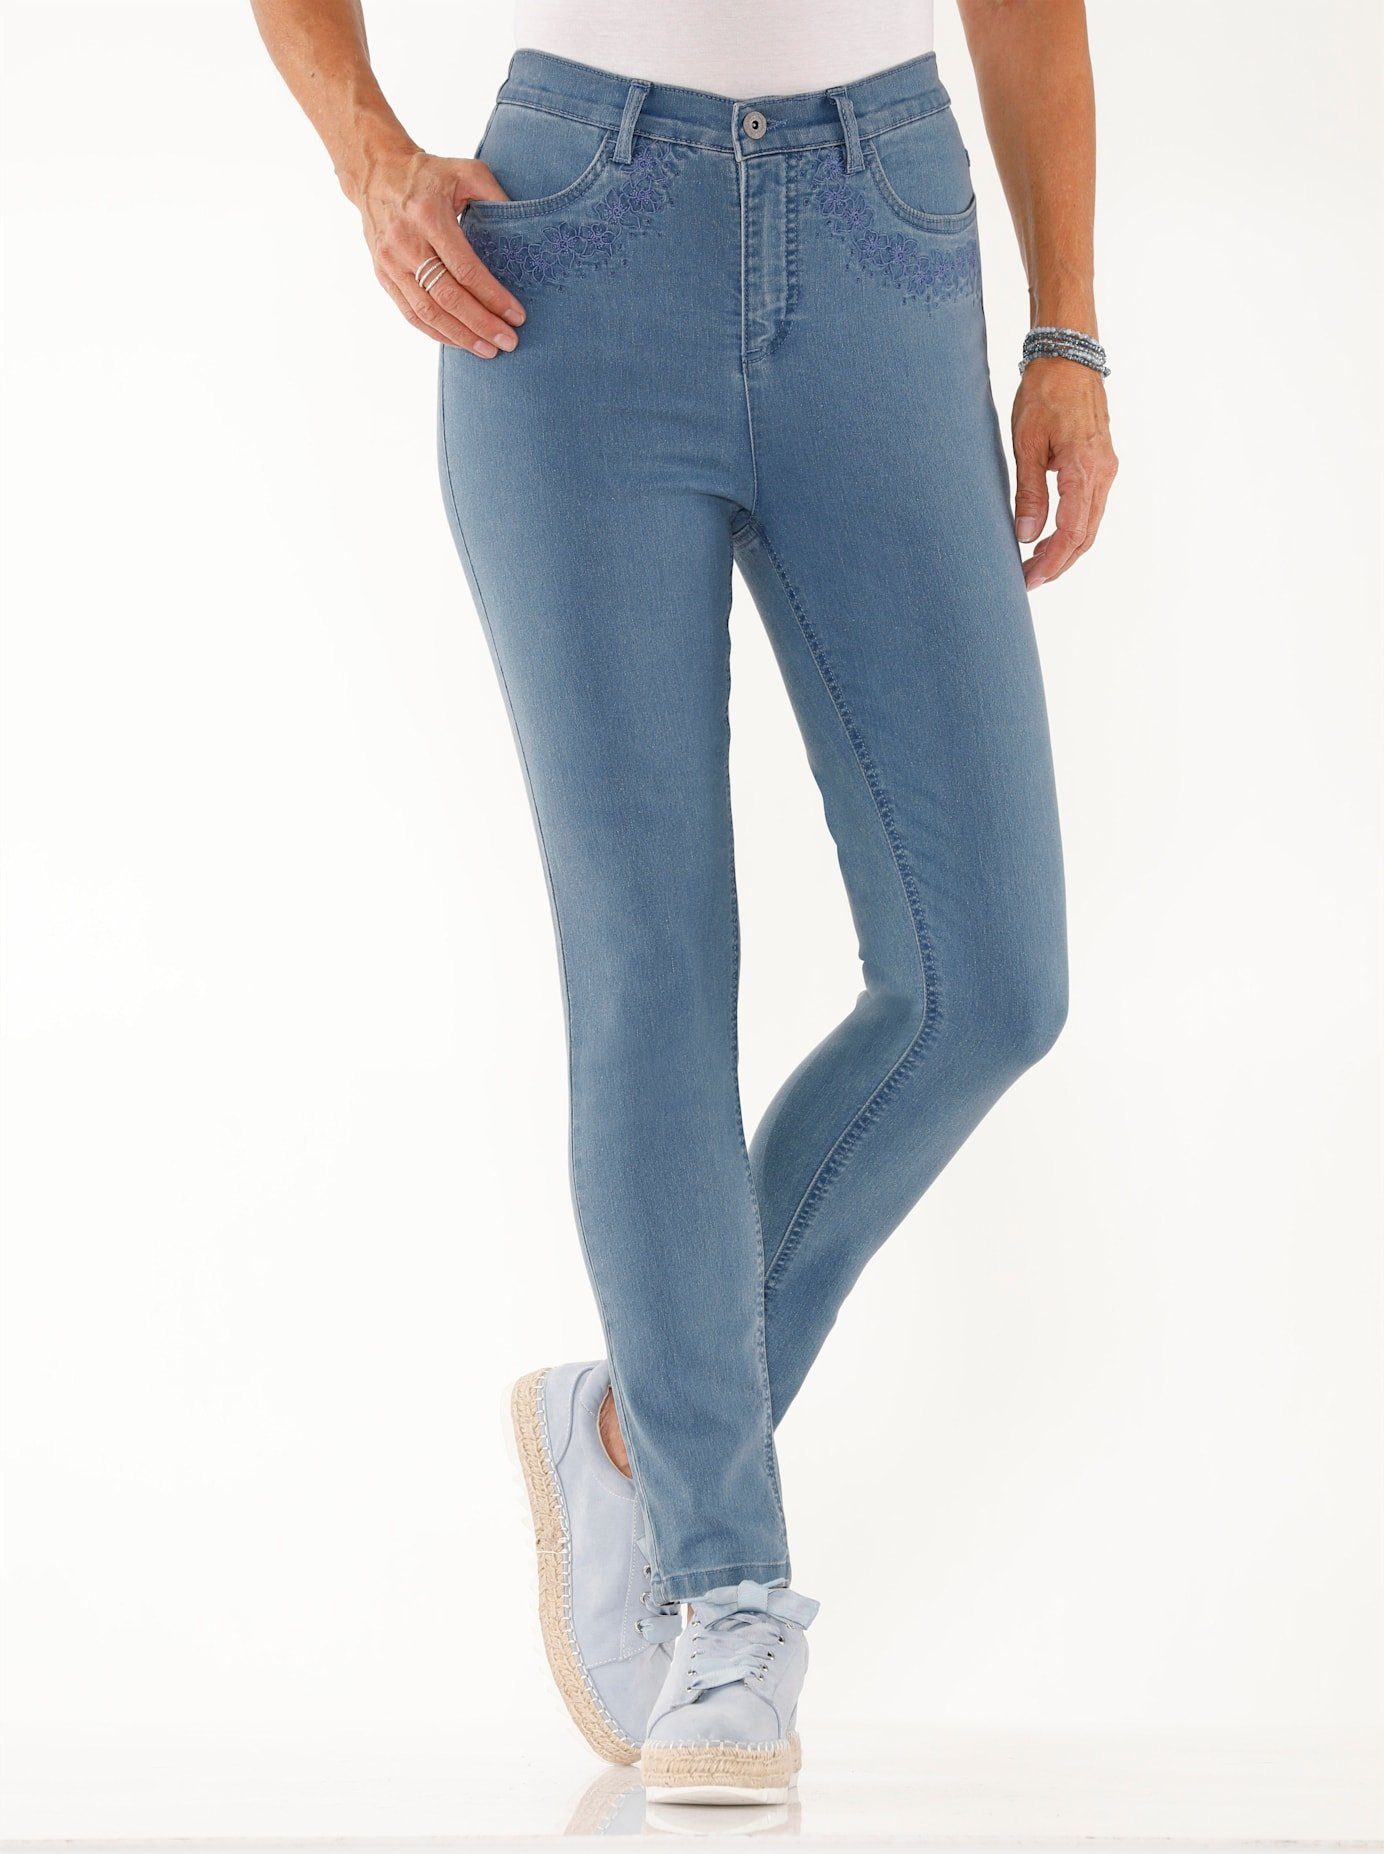 Classic Basics Prettige jeans